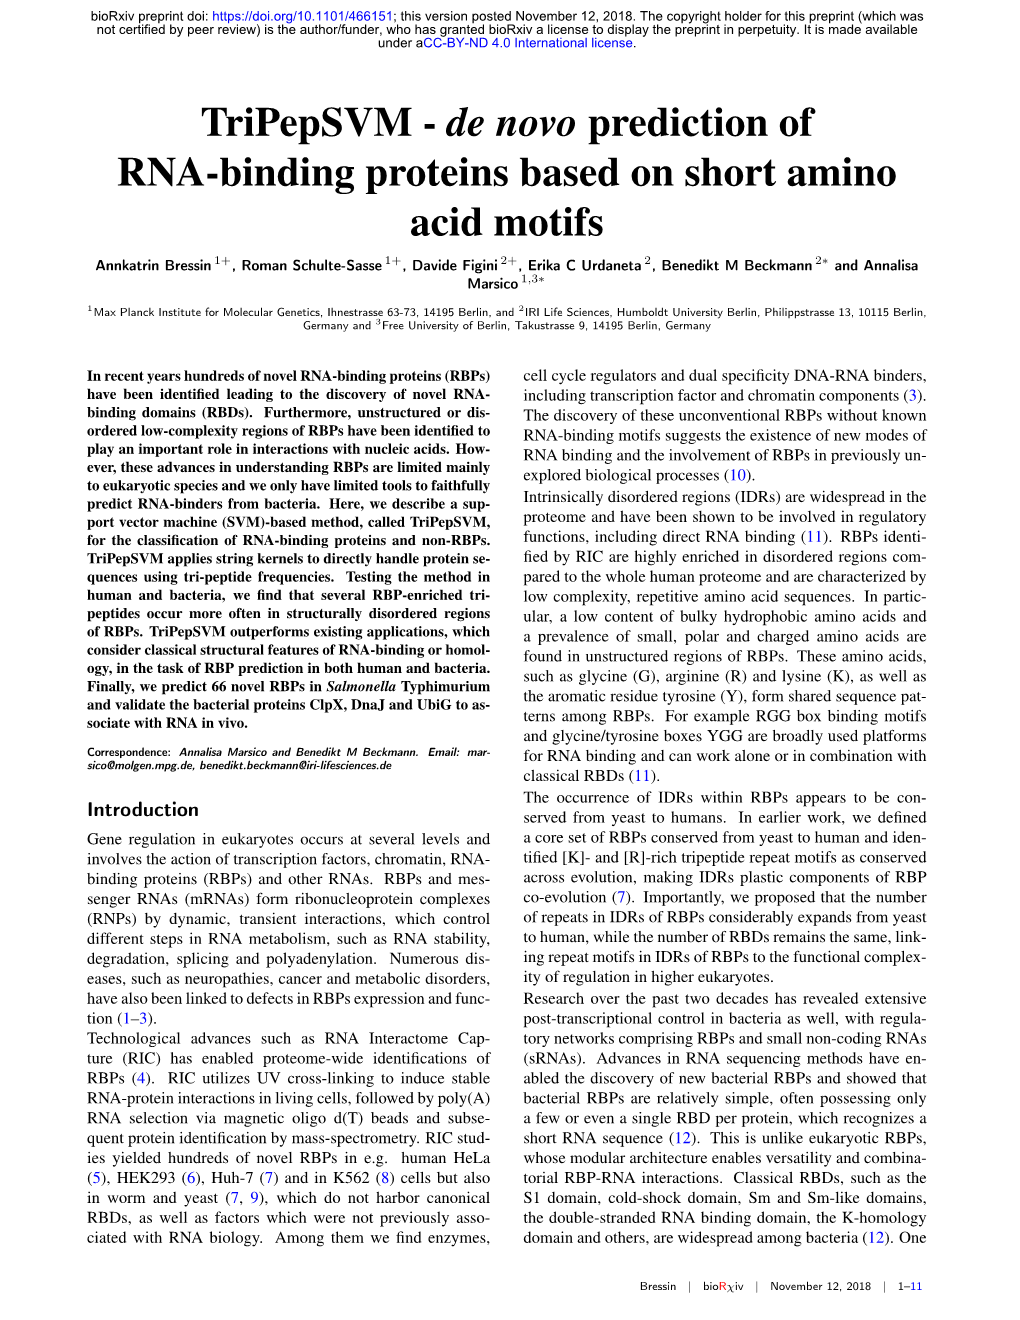 De Novo Prediction of RNA-Binding Proteins Based on Short